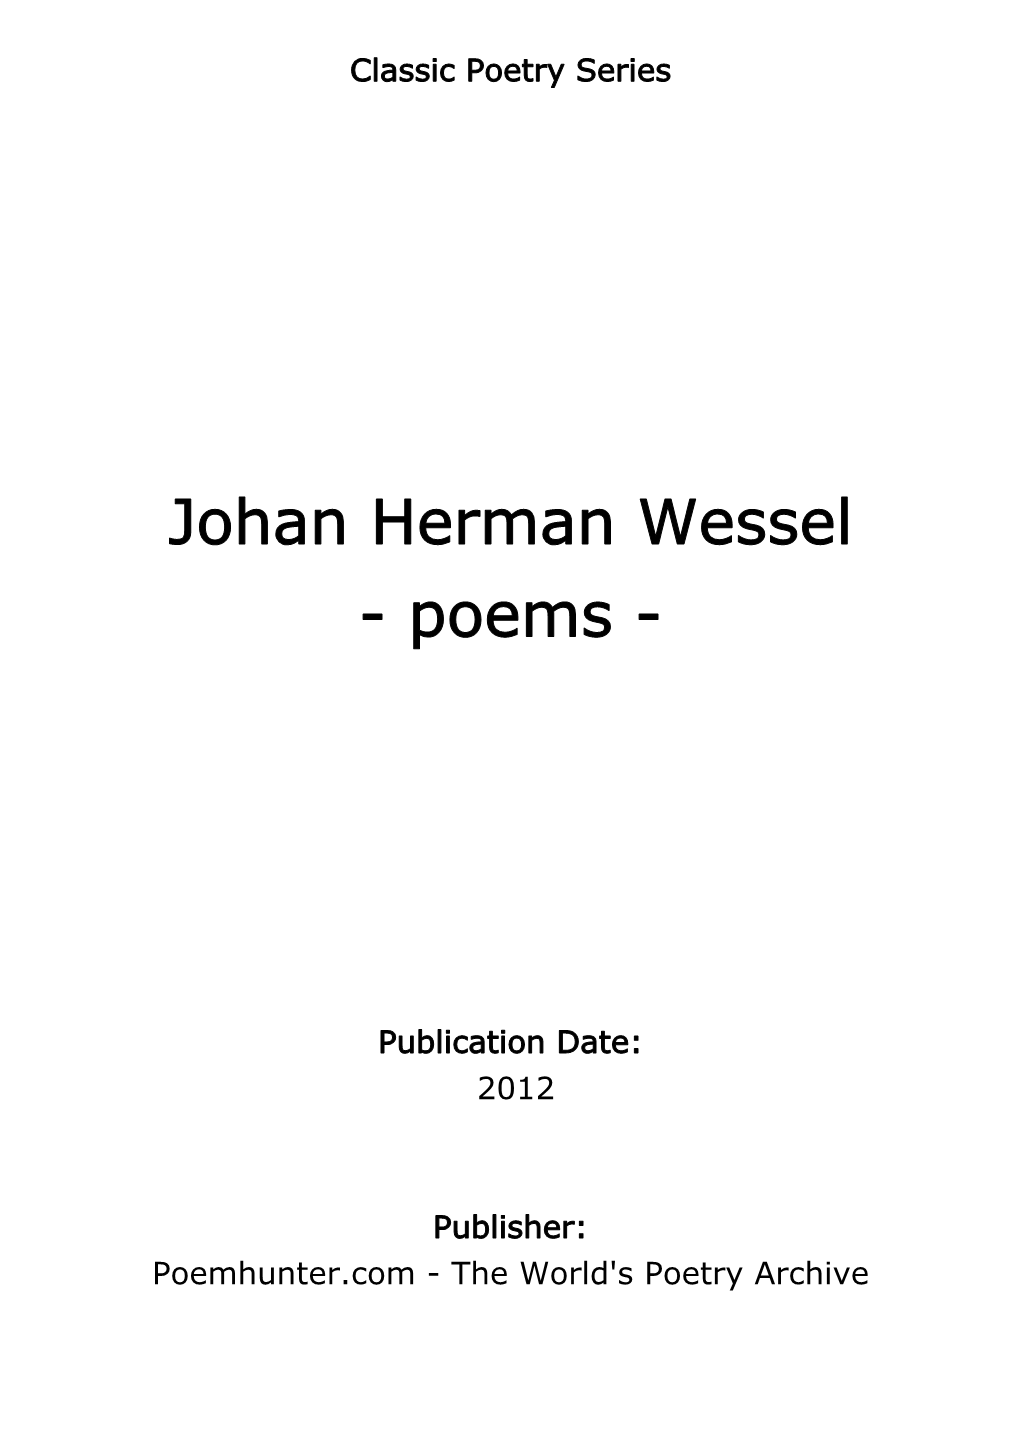 Johan Herman Wessel - Poems